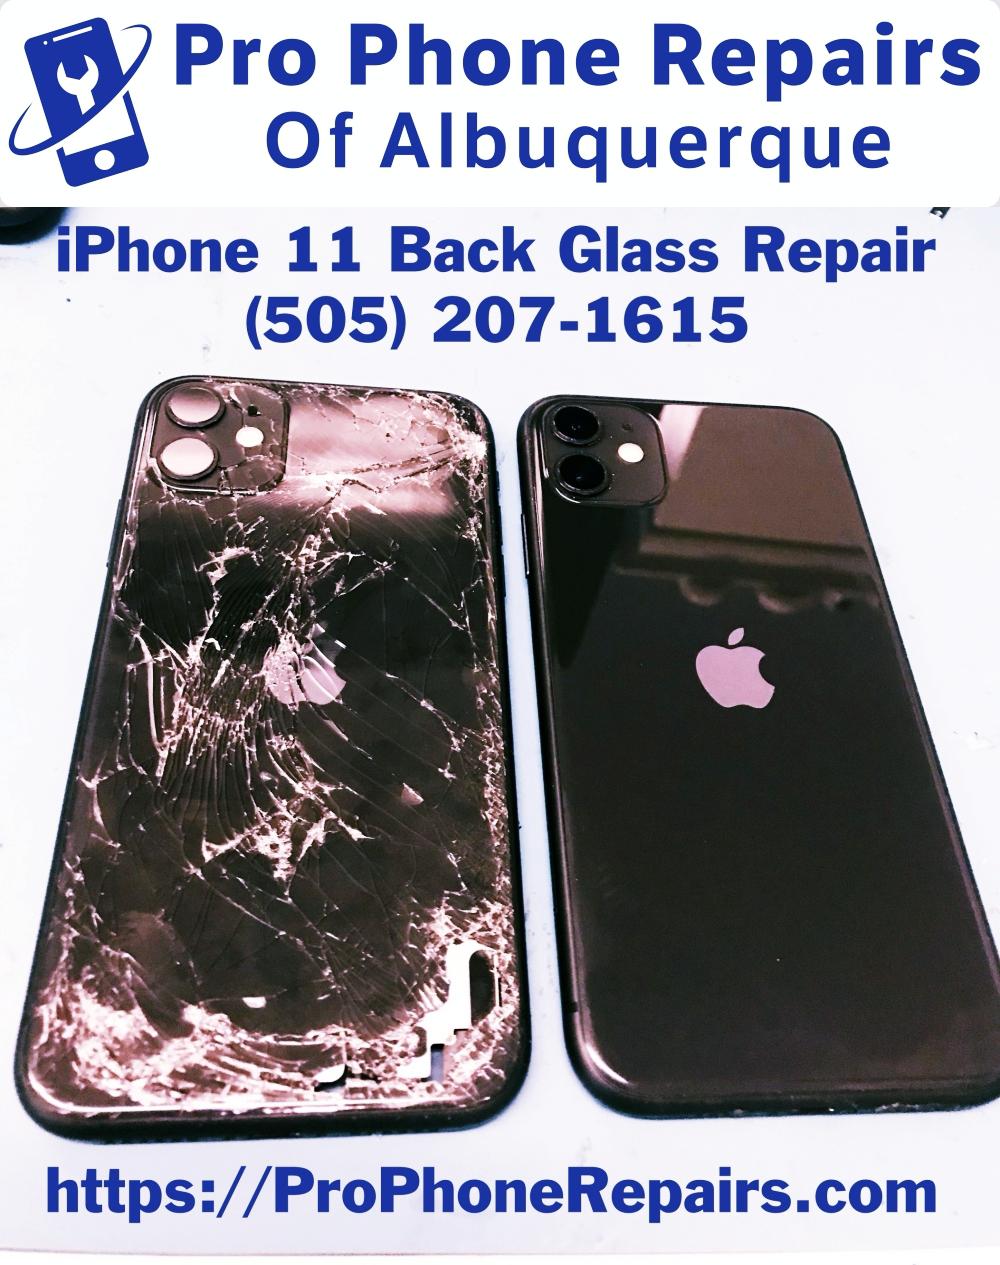 iPhone 11 back glass repair by Pro Phone Repairs of Albuquerque